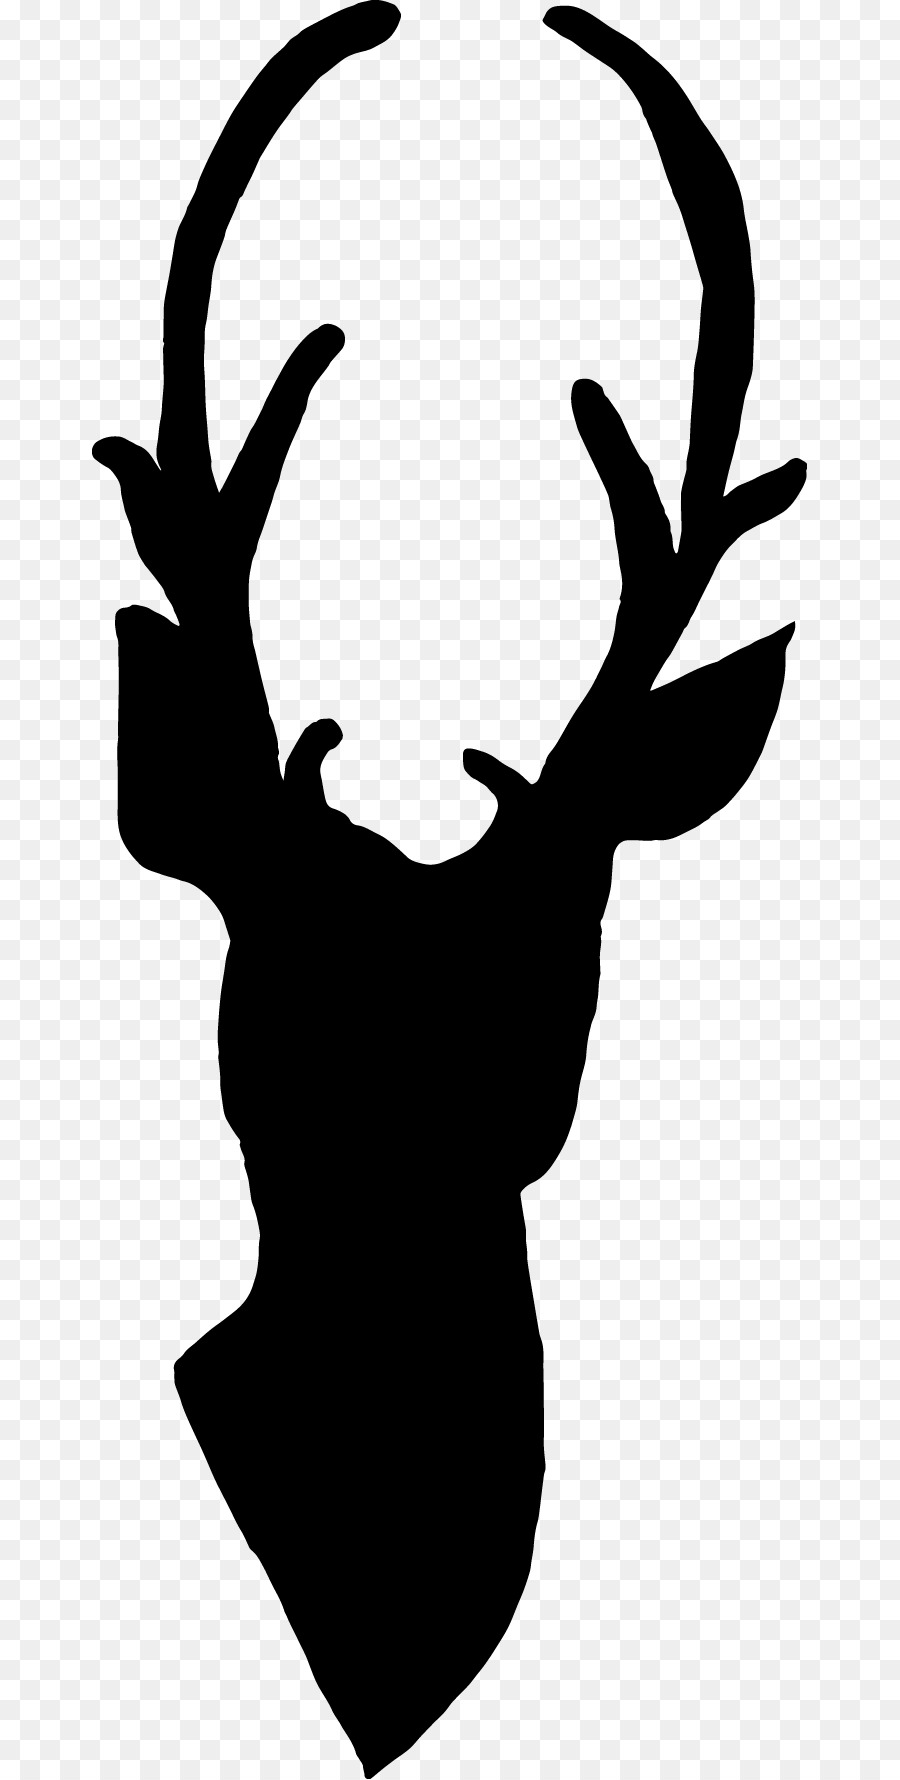 Deer Silhouette Antler Line art Clip art - deer png download - 715*1779 - Free Transparent Deer png Download.